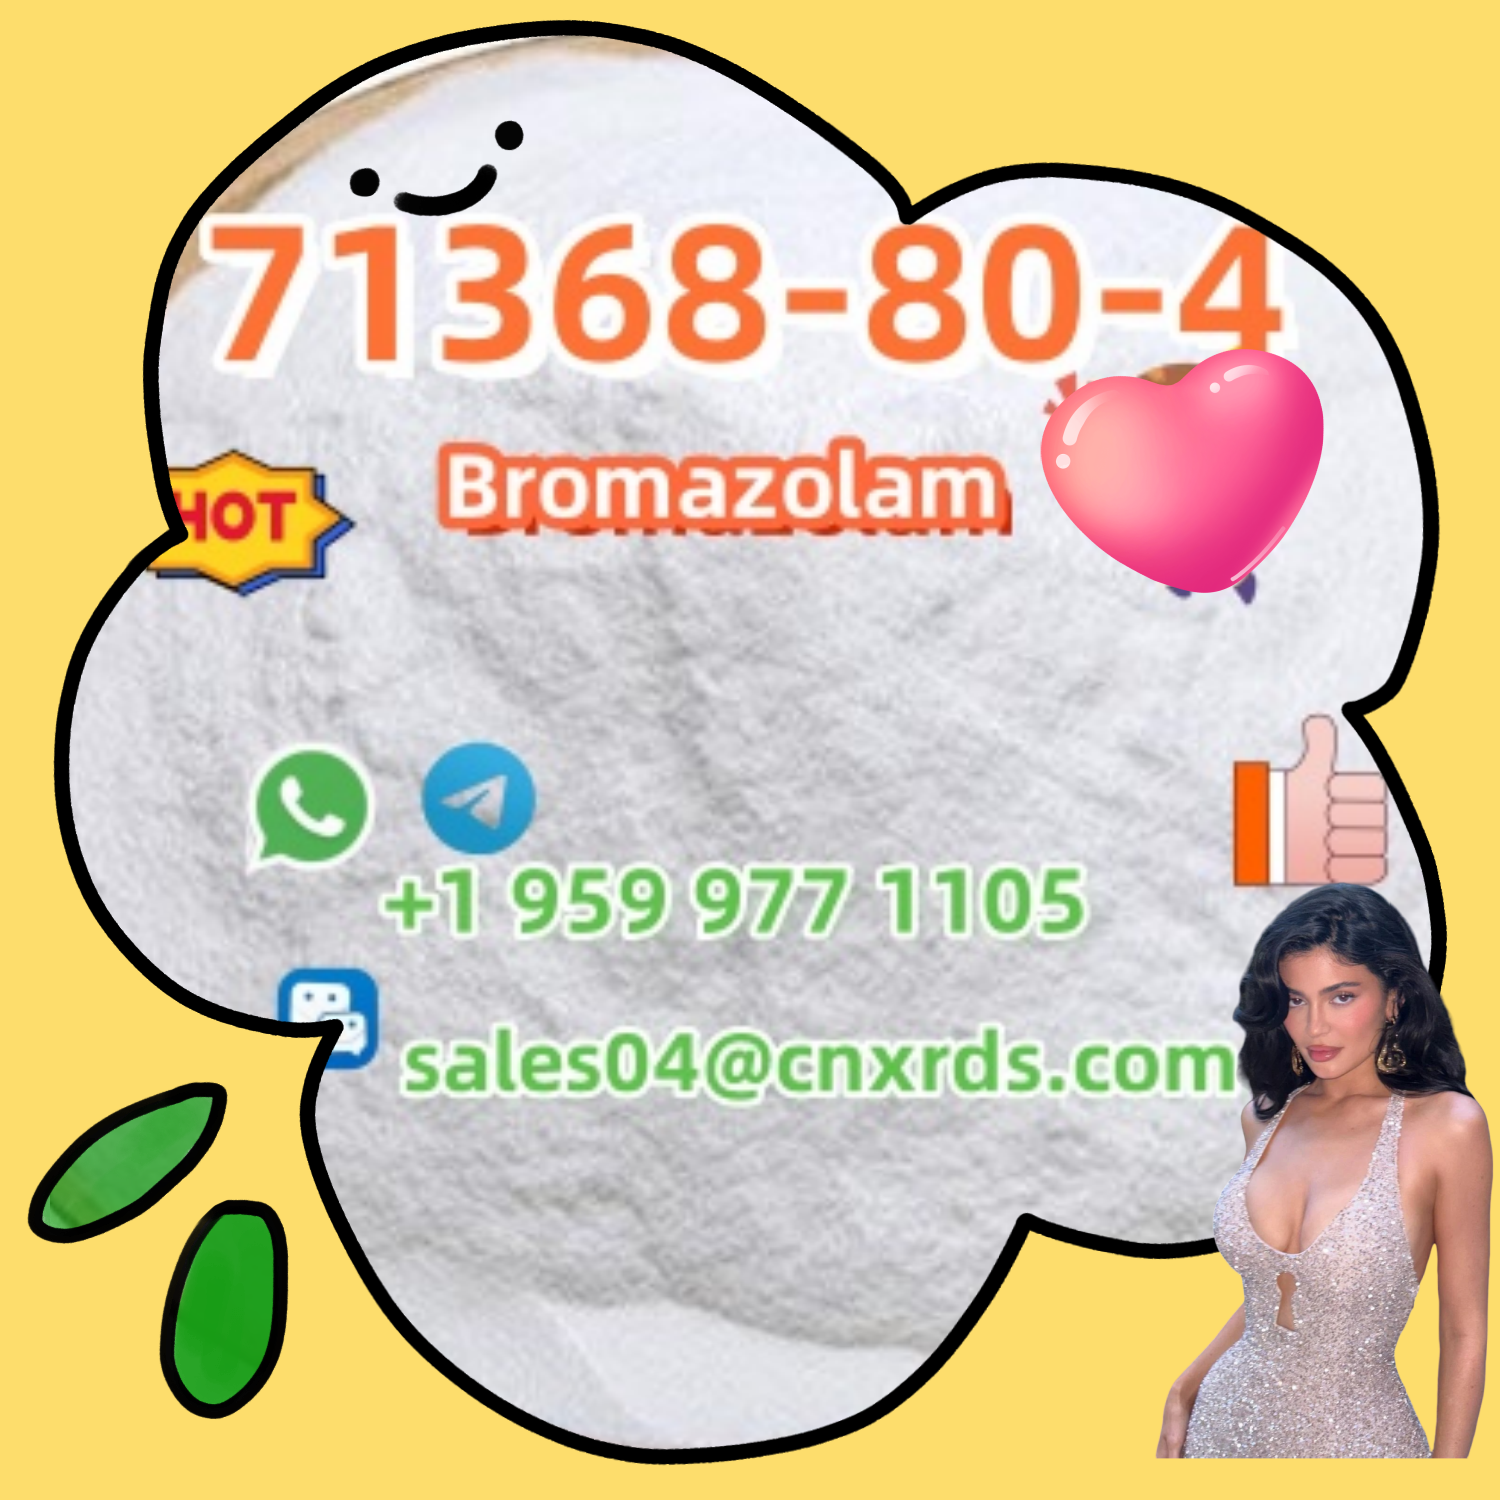 Pharmaceutical Grade 99% Purity Bromazolam CAS 71368-80-4